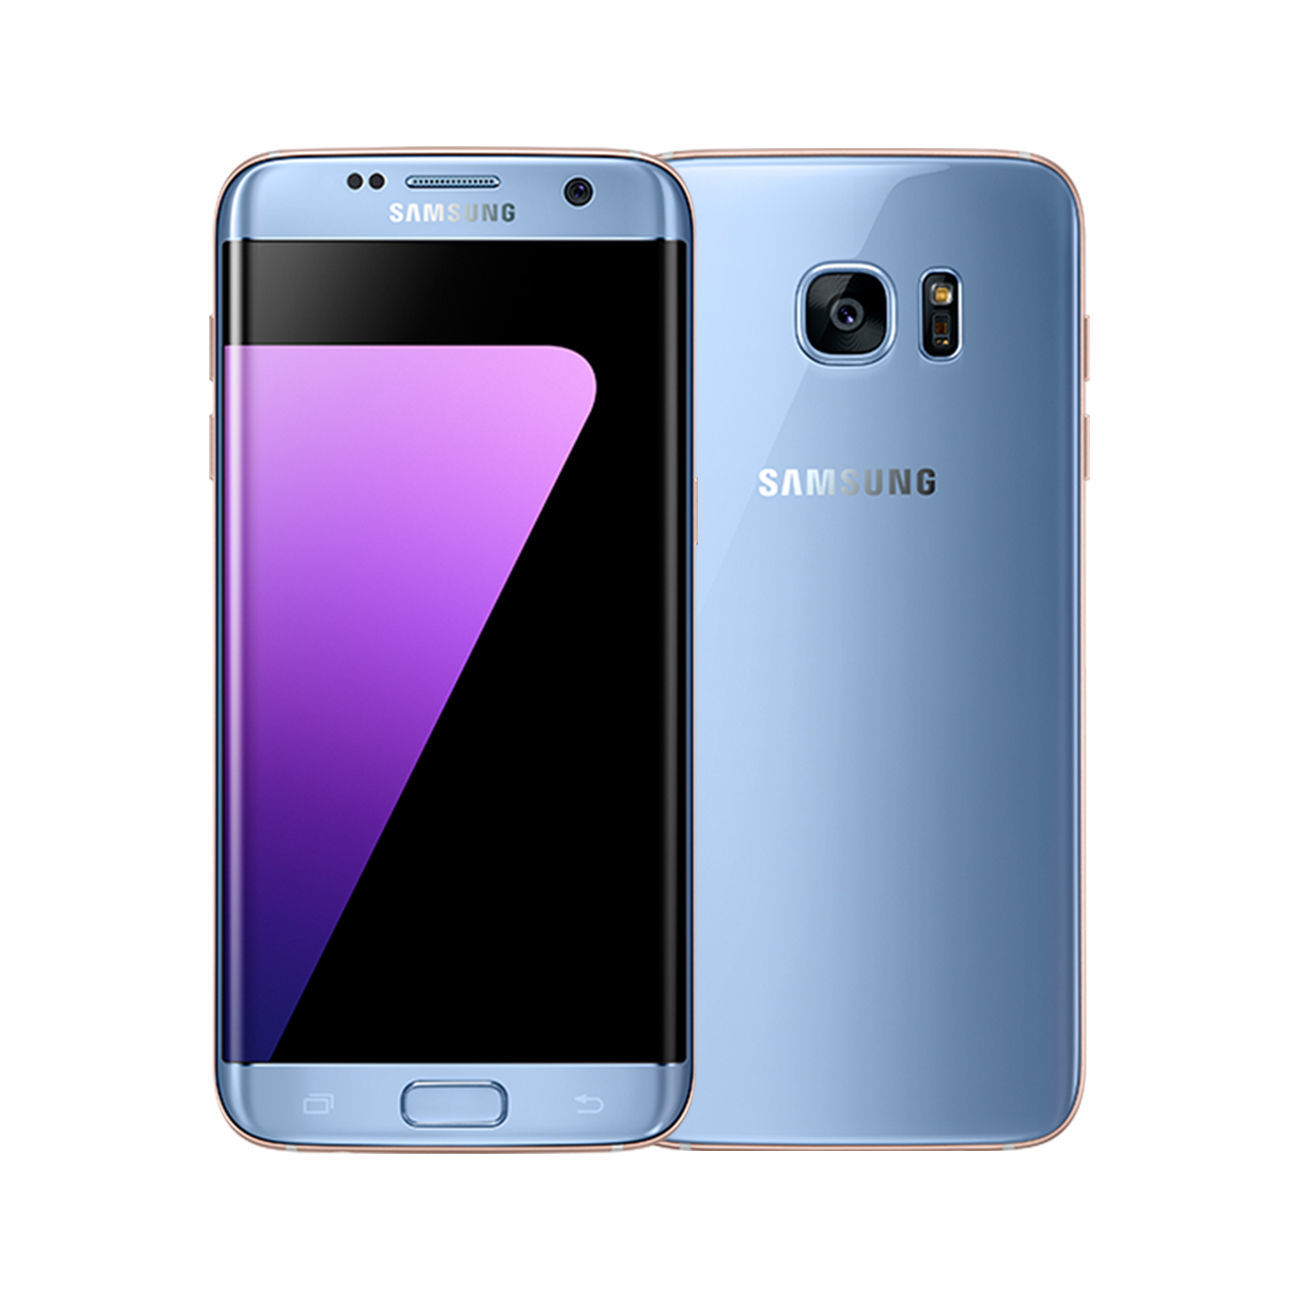 Samsung Galaxy S7 edge [32GB] [Coral Blue] [Imperfect]